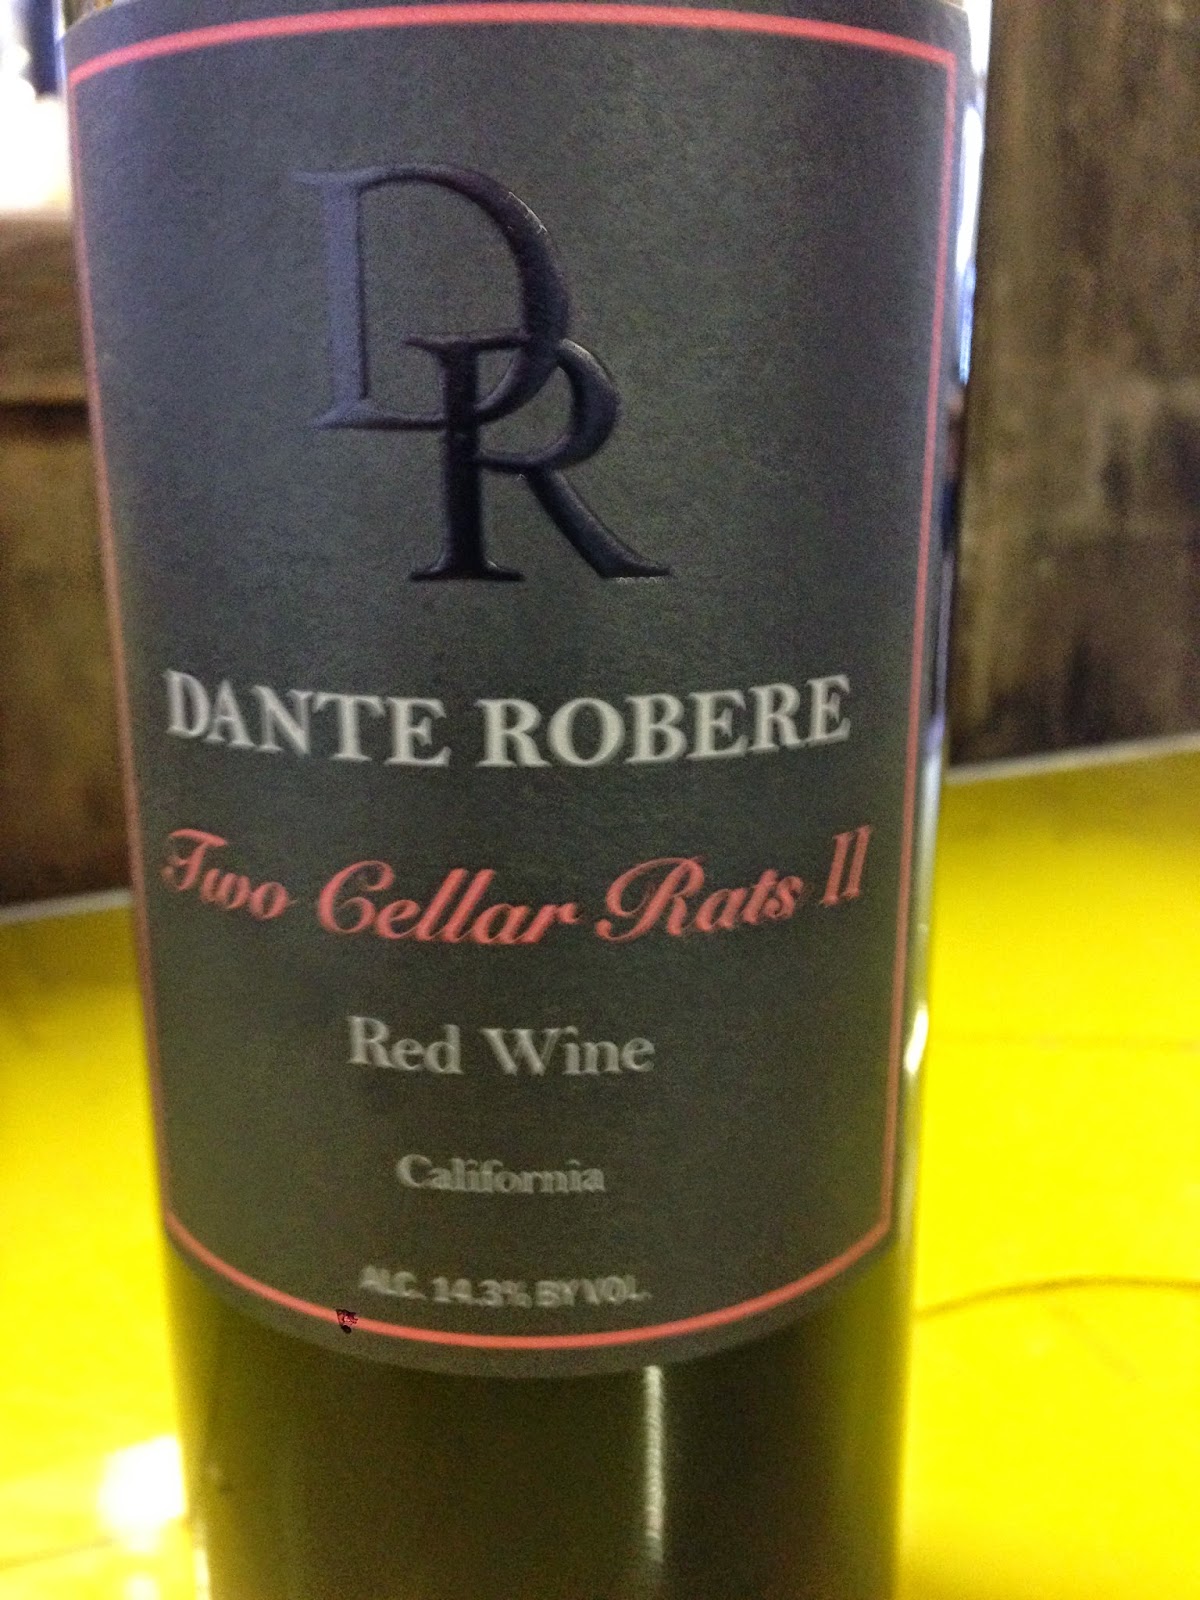 Dante Robere Vineyards: An Update